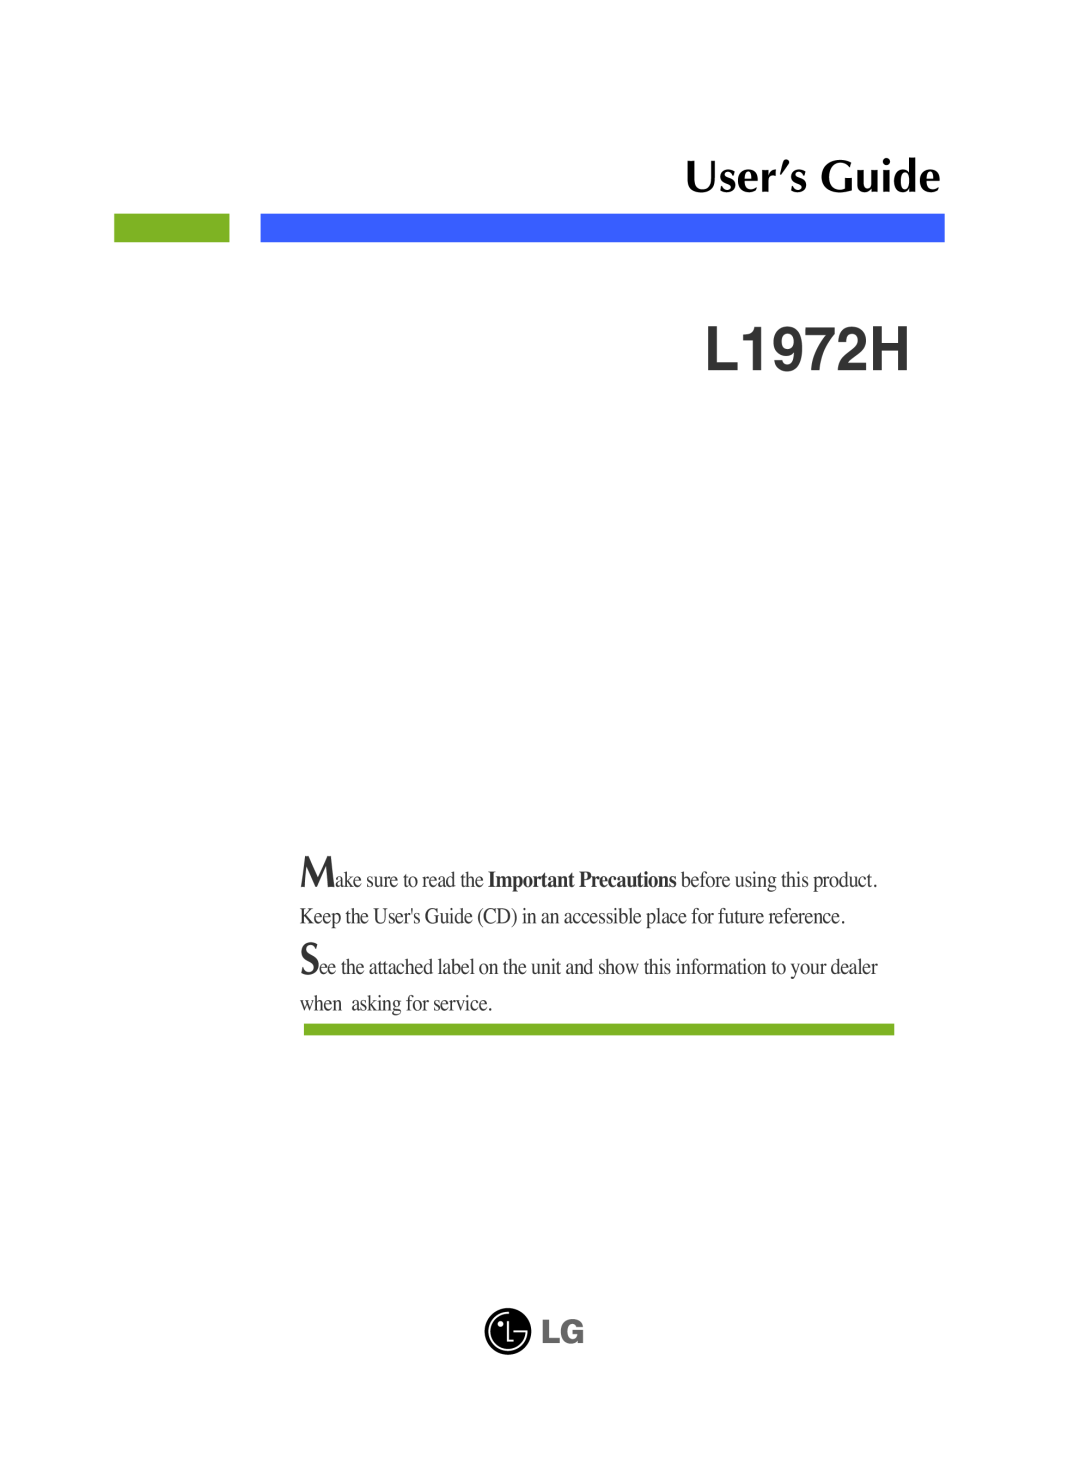 LG Electronics L1972H manual User’s Guide 